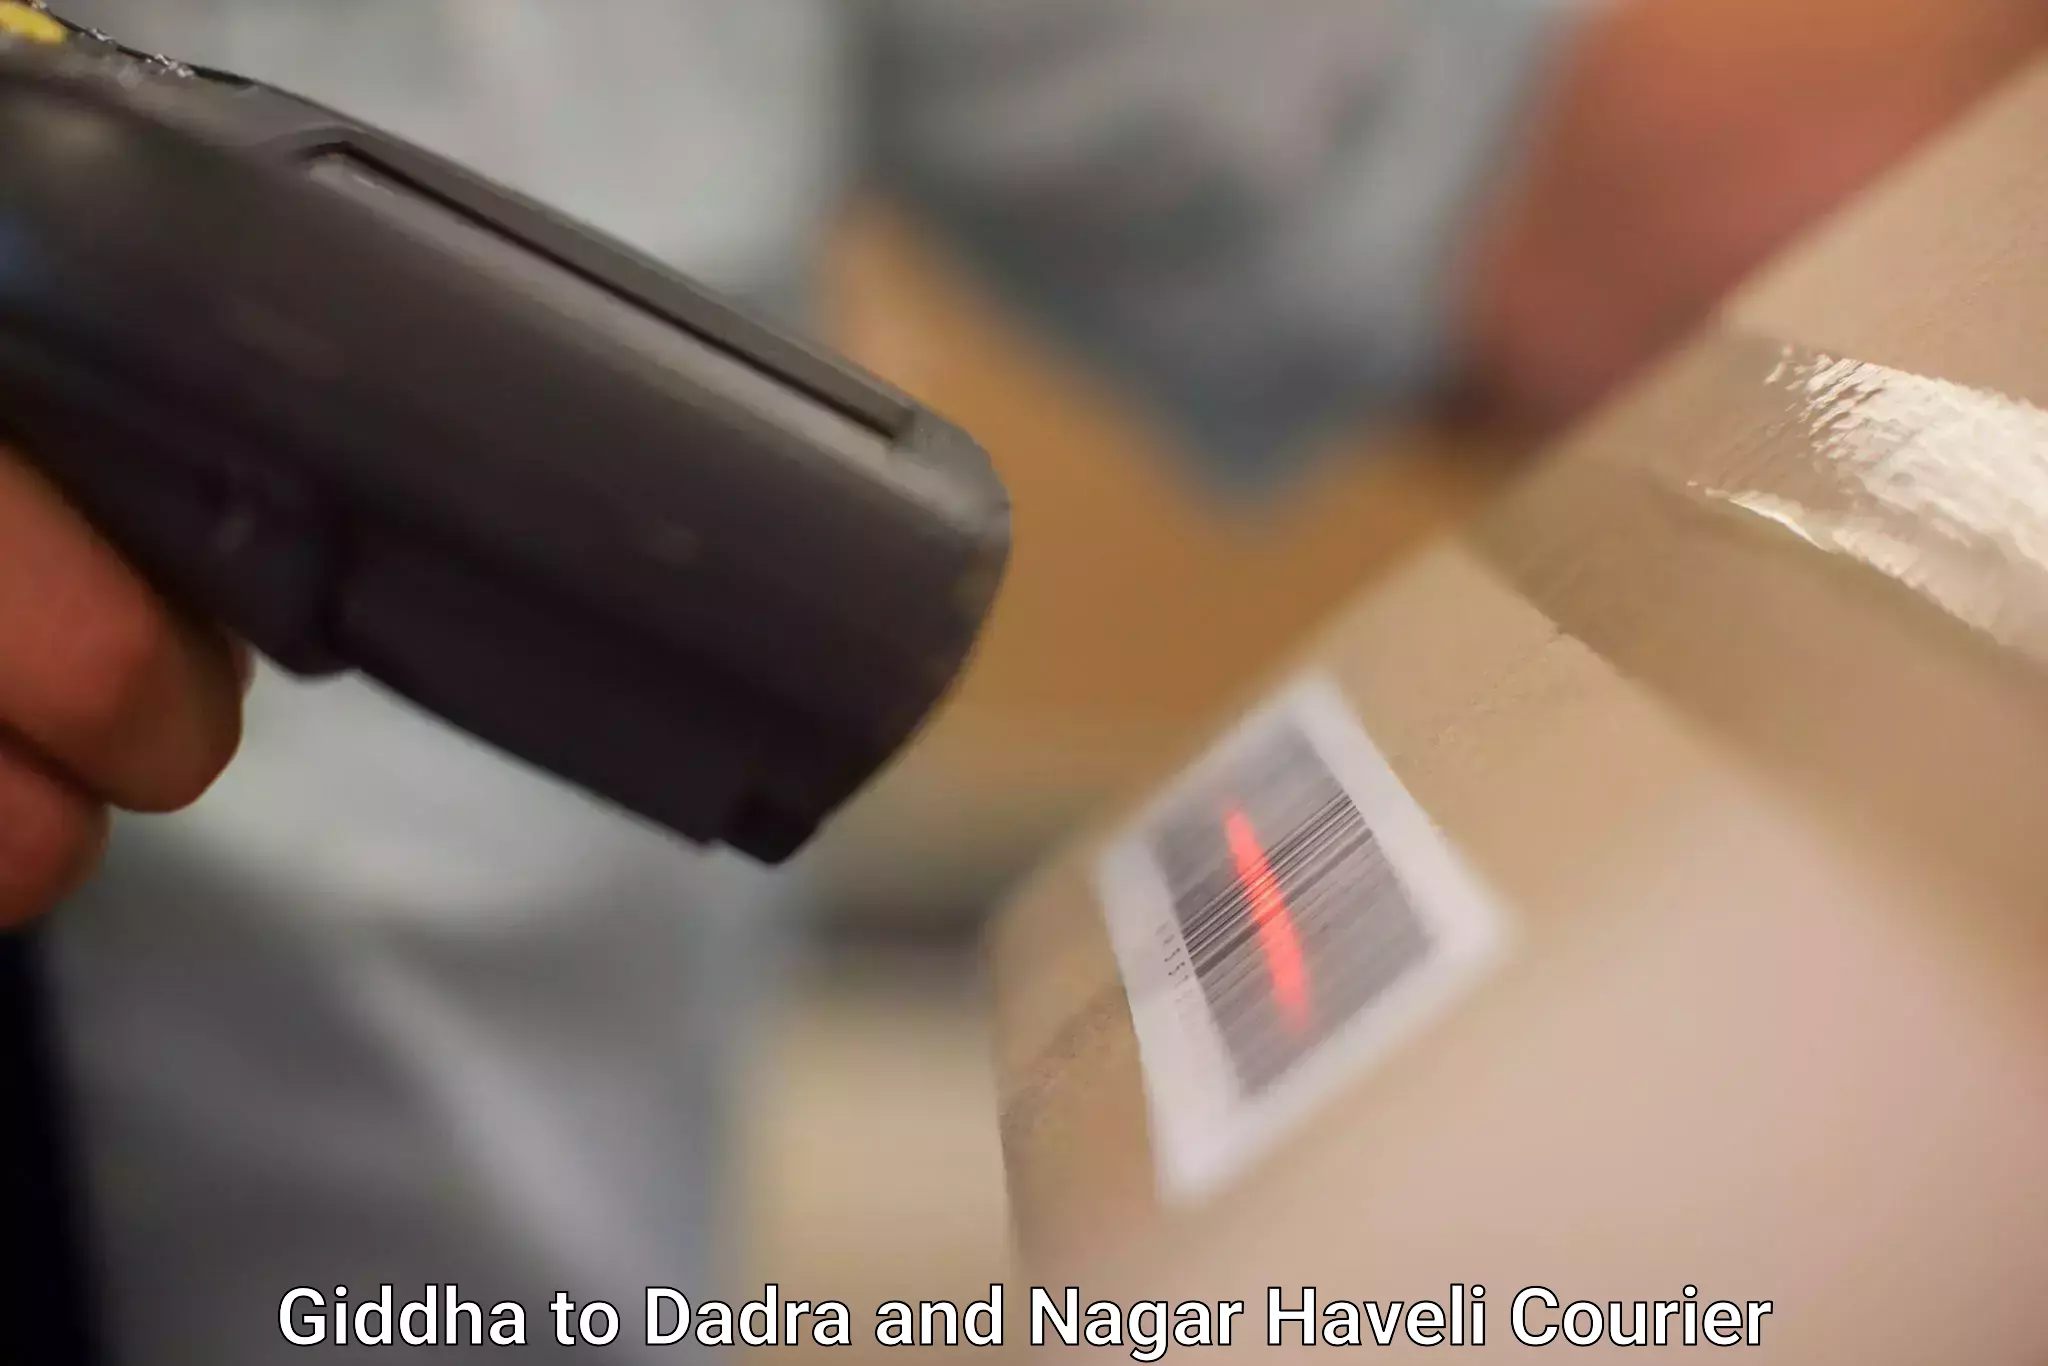 Courier tracking online Giddha to Dadra and Nagar Haveli